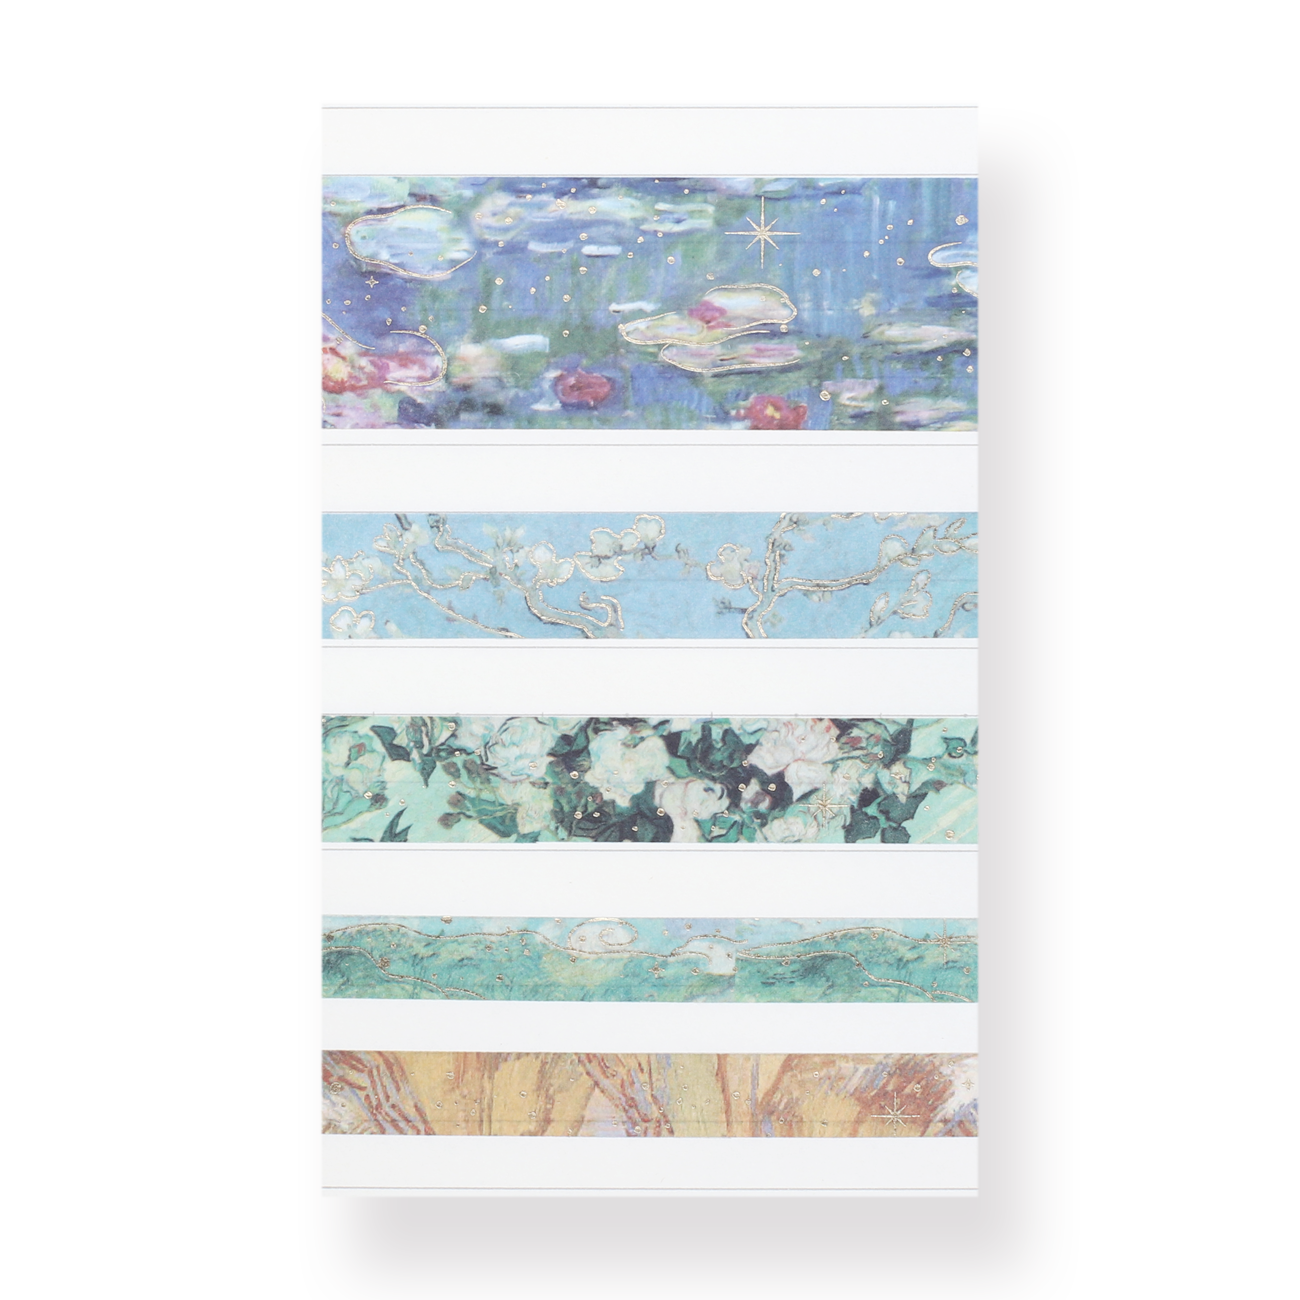 Gallery Theme Washi Tape - Set of 10 - Stationery Pal